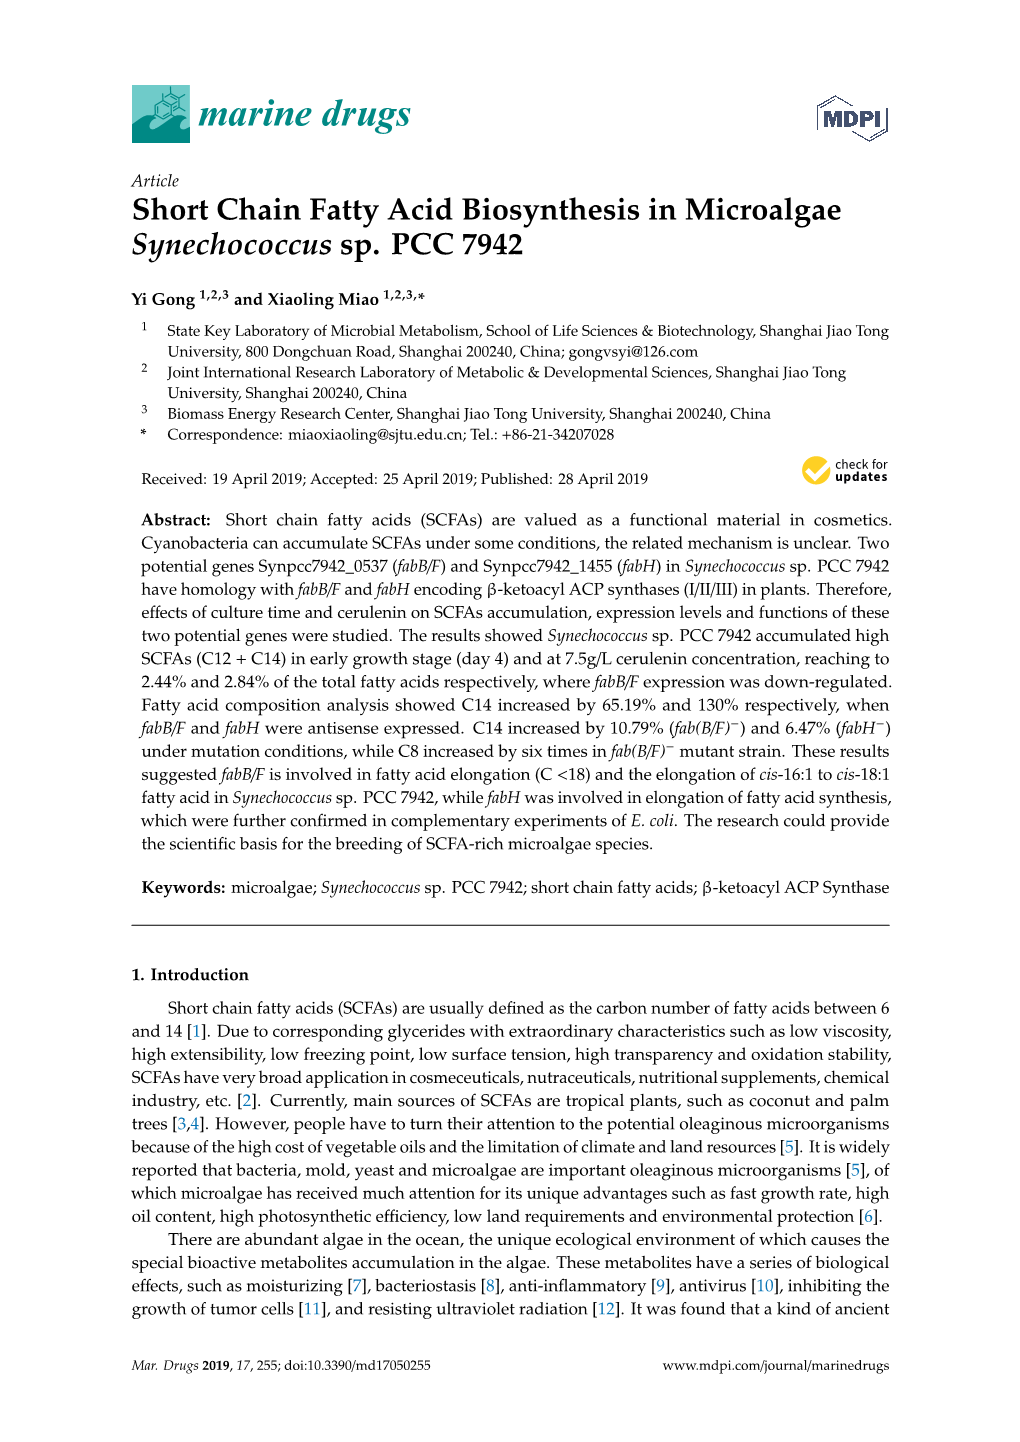 Short Chain Fatty Acid Biosynthesis in Microalgae Synechococcus Sp. PCC 7942